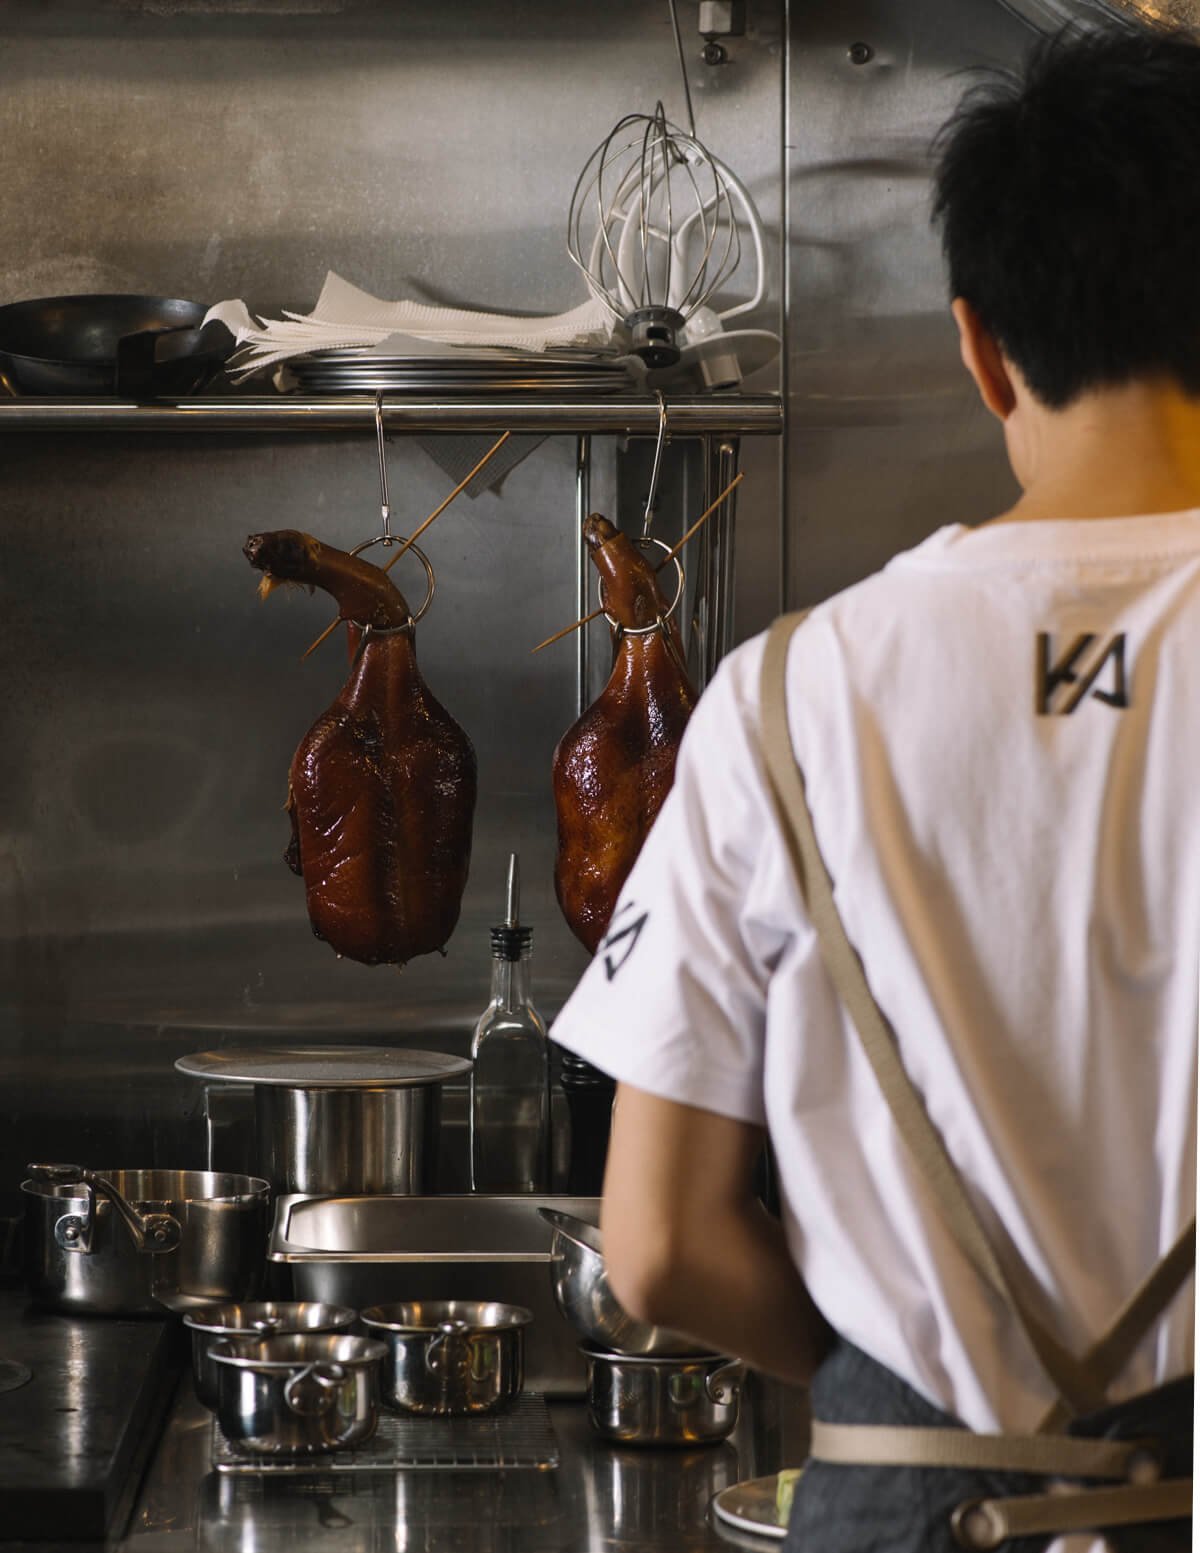  Chef preparing food in an industrial kitchen 